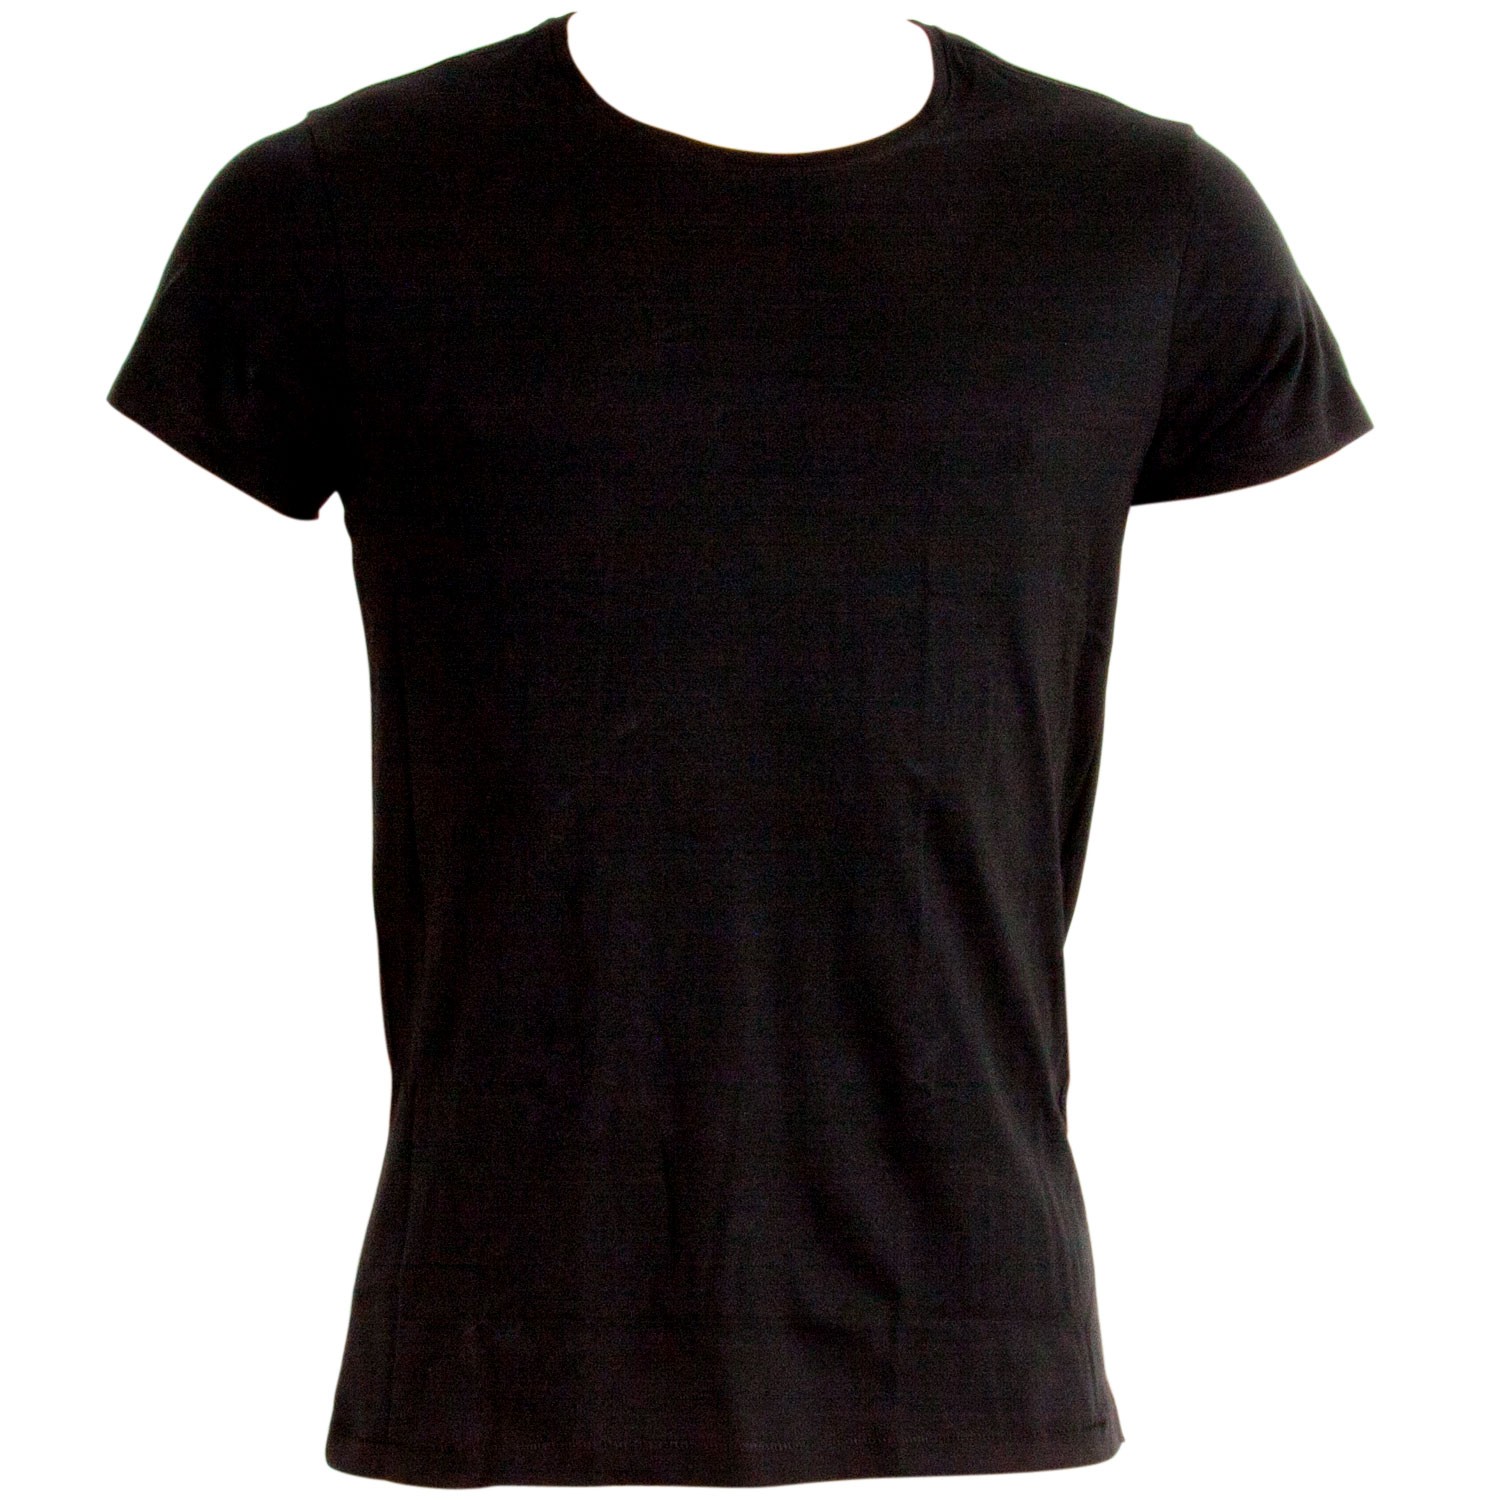 Whipstitch T-shirt Black